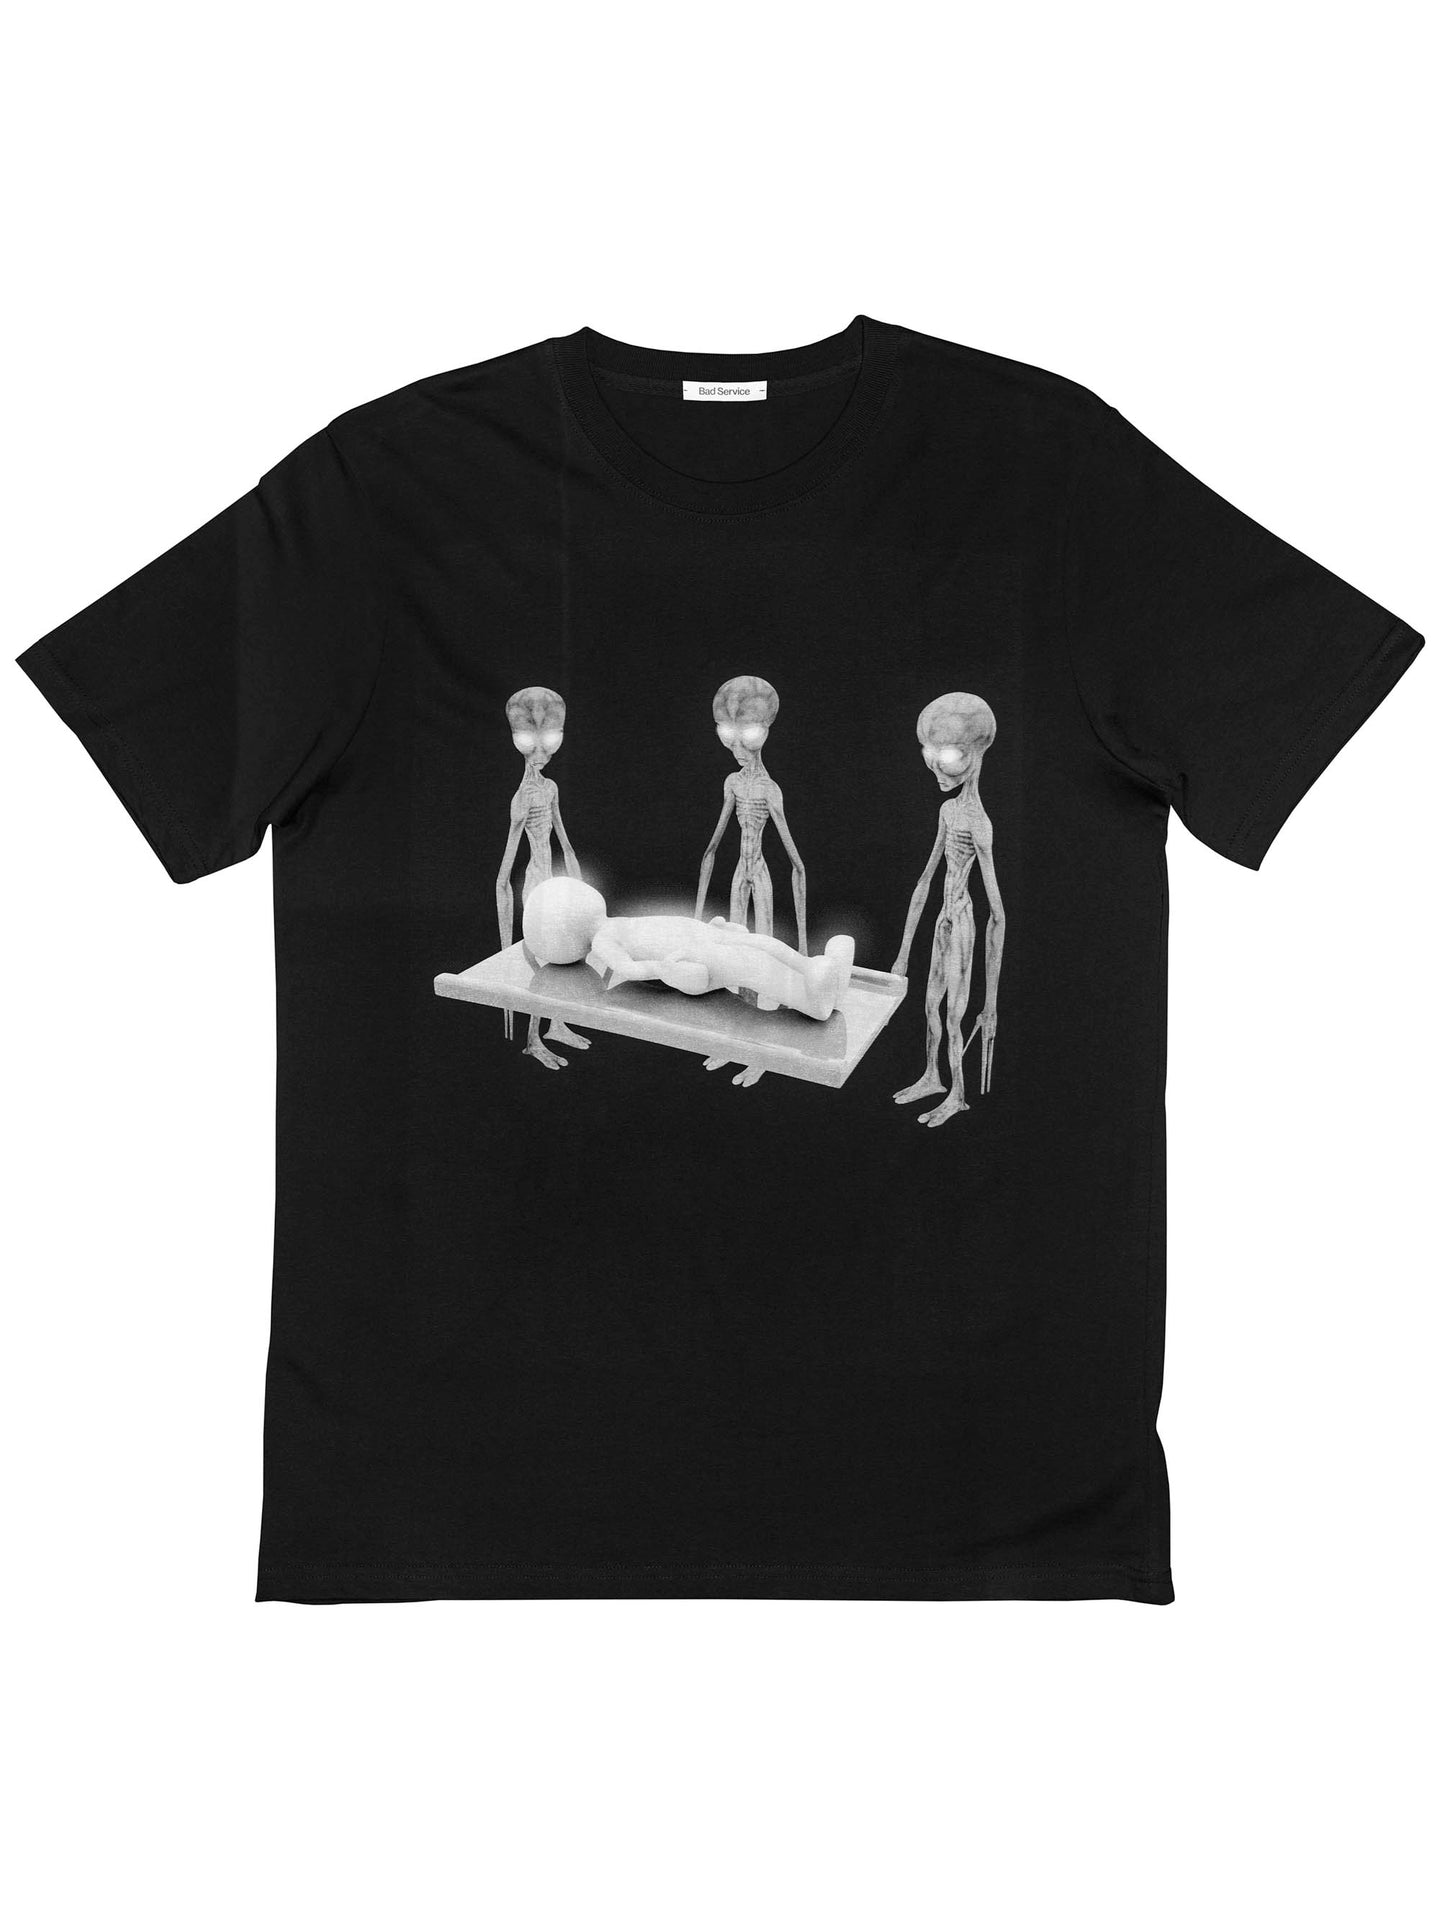 BS T-shirt - Aliens